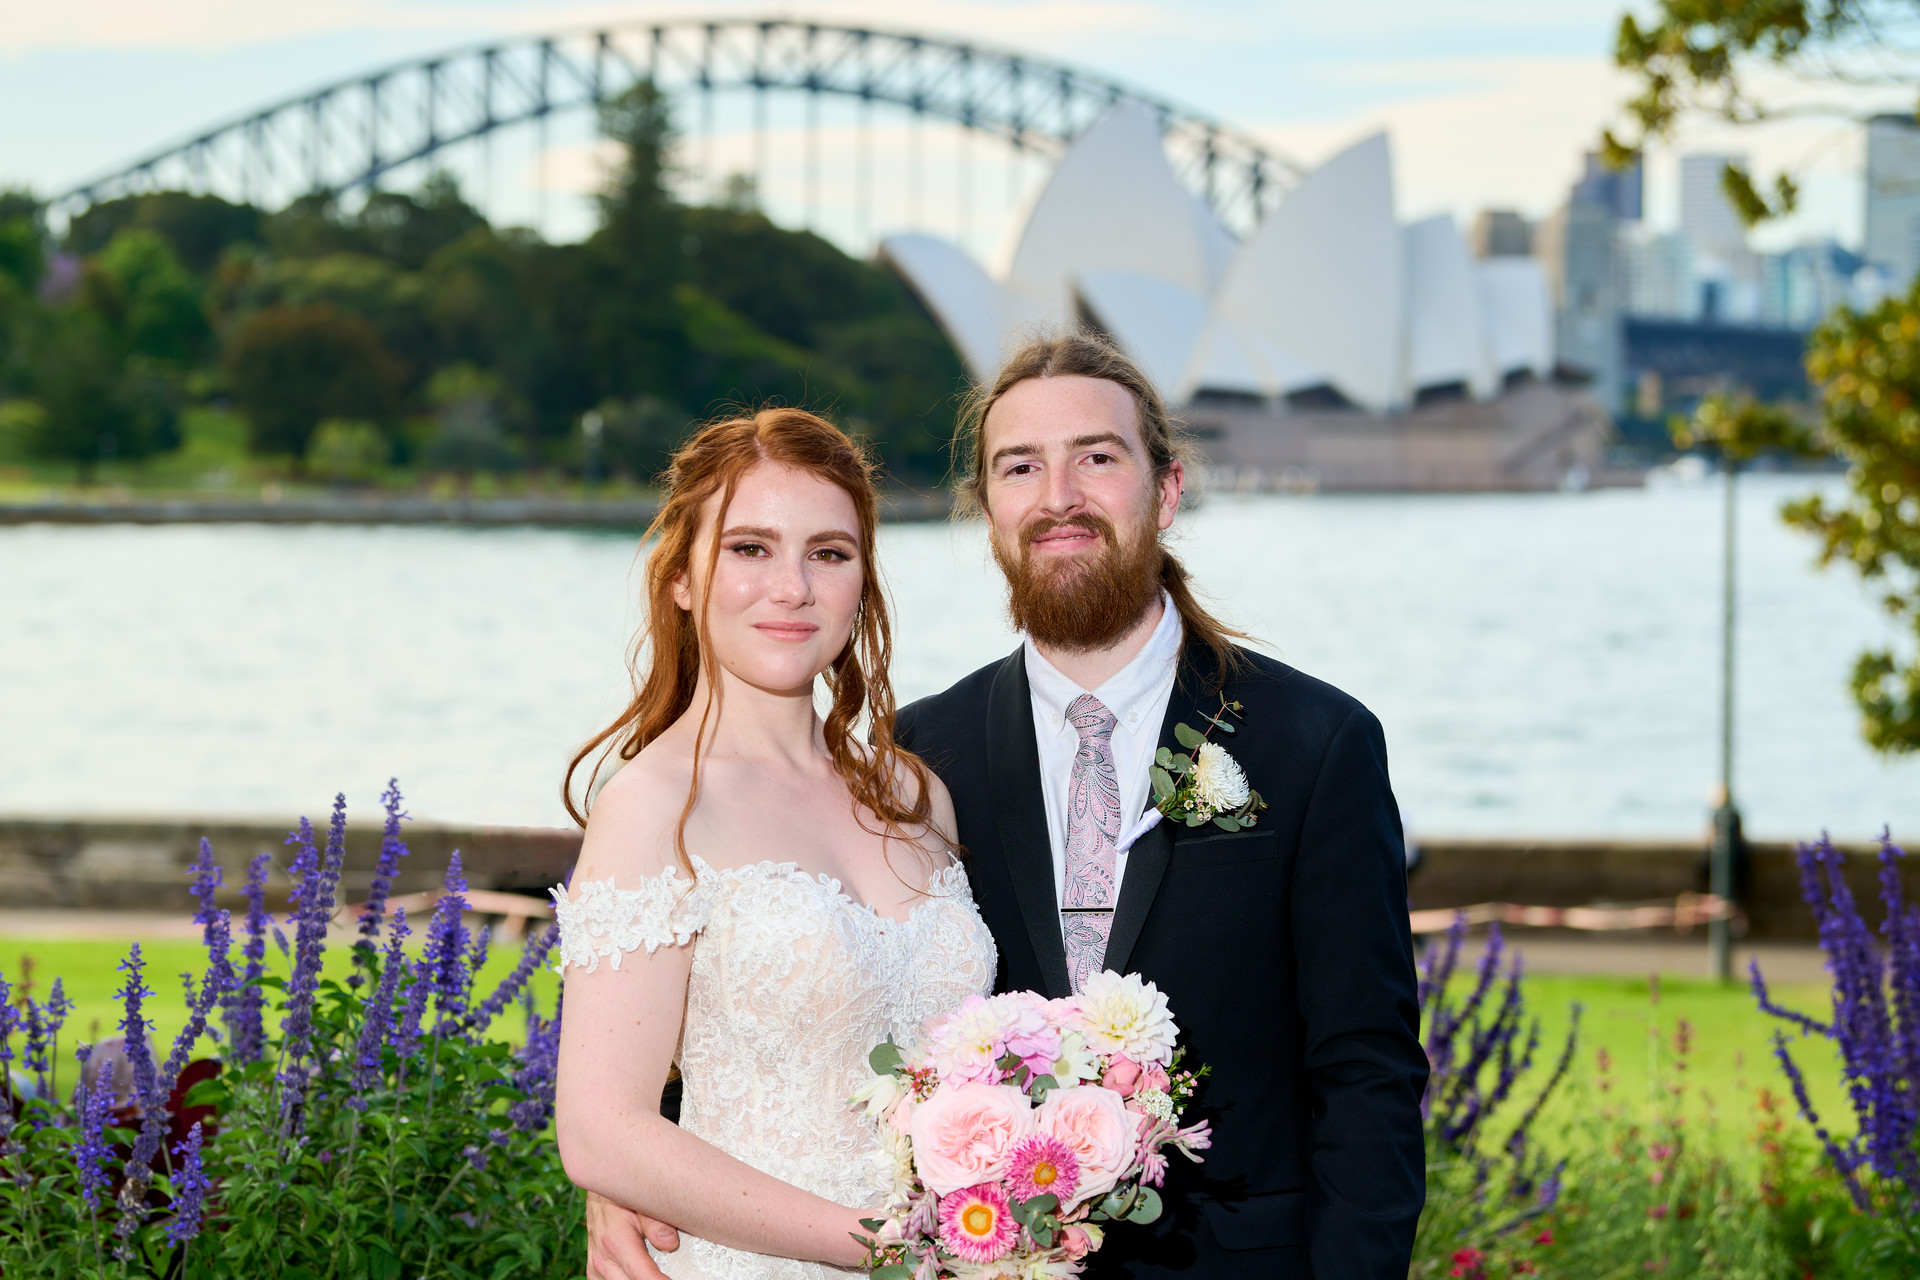 Wedding on Sydney Harbour Photography. From Sydney Royal Botanic Gardens. Photos By orlandosydney.com